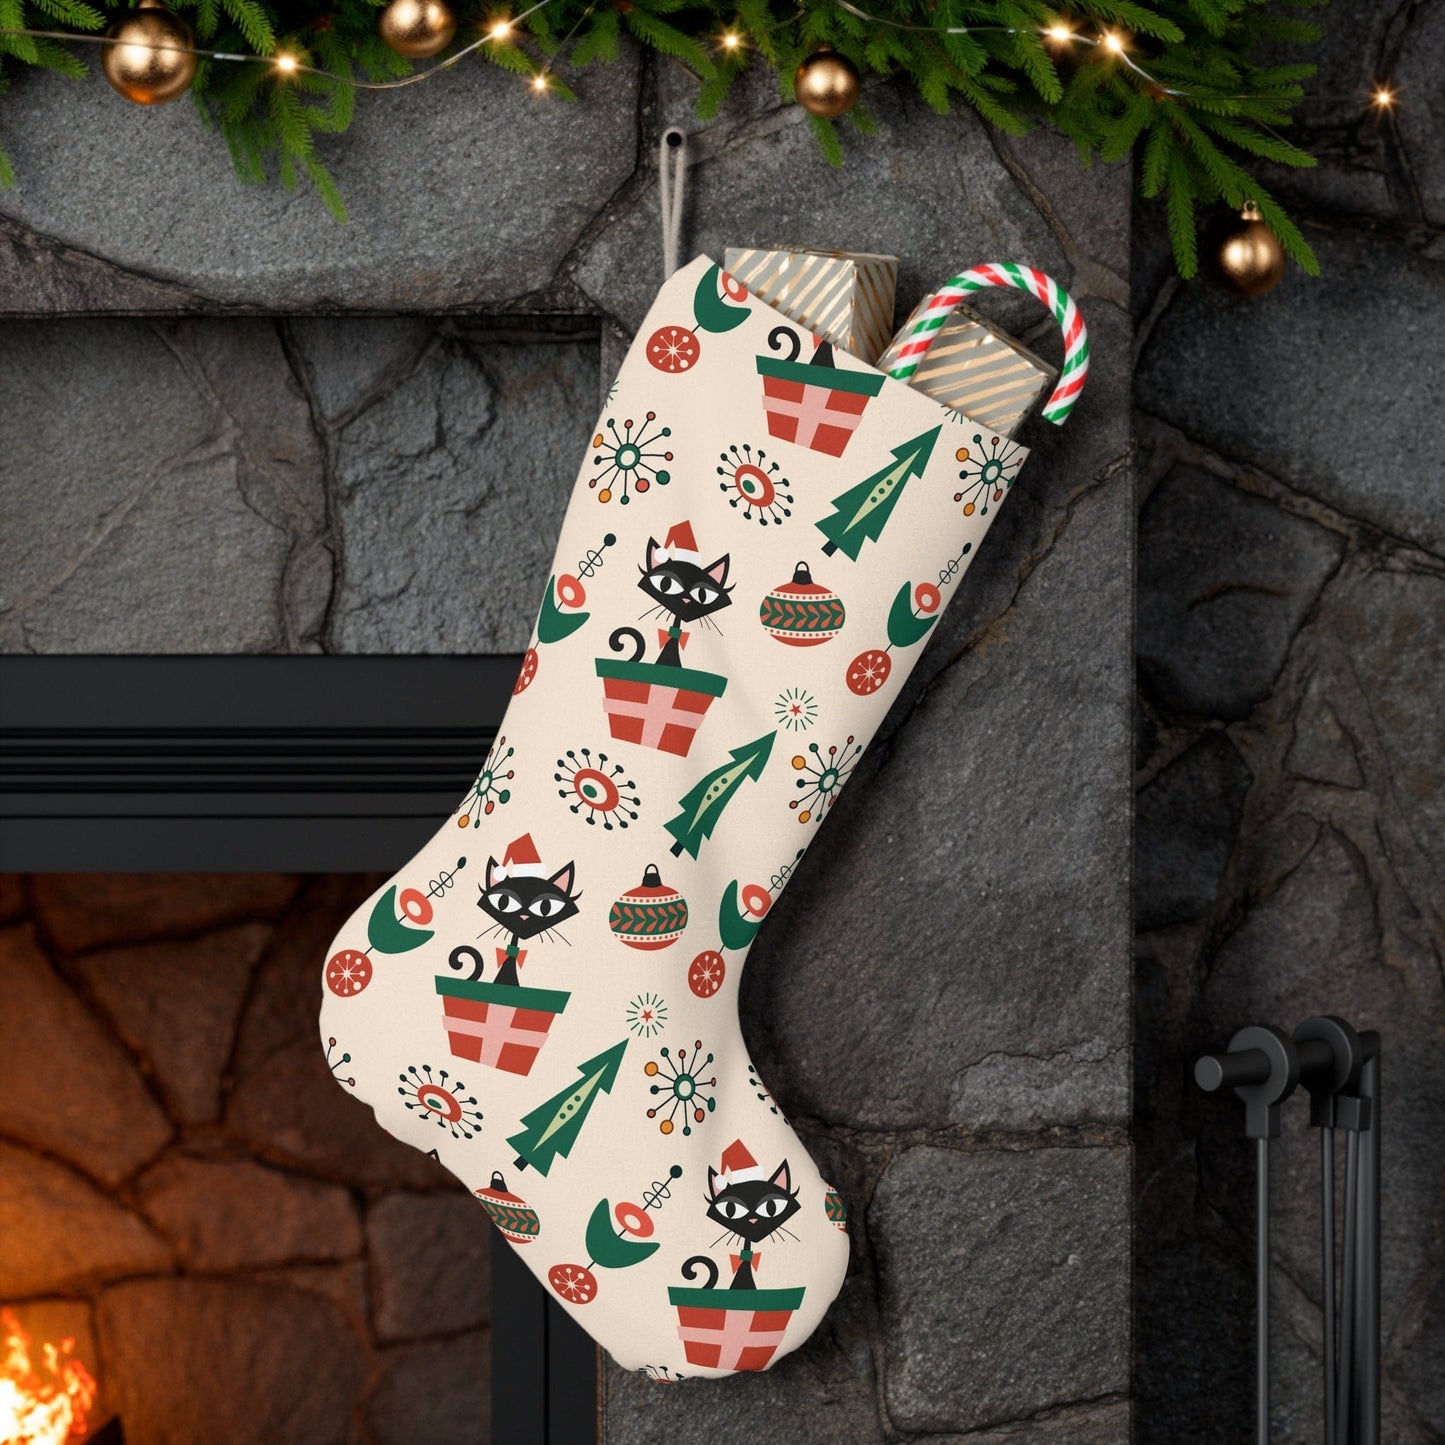 Kate McEnroe New York Atomic Kitschy Cat Santa Stocking, Mid Century Modern Retro Starburst Christmas Decor, 1970s Vintage Christmas Stockings Holiday Stockings 12371521042981700142